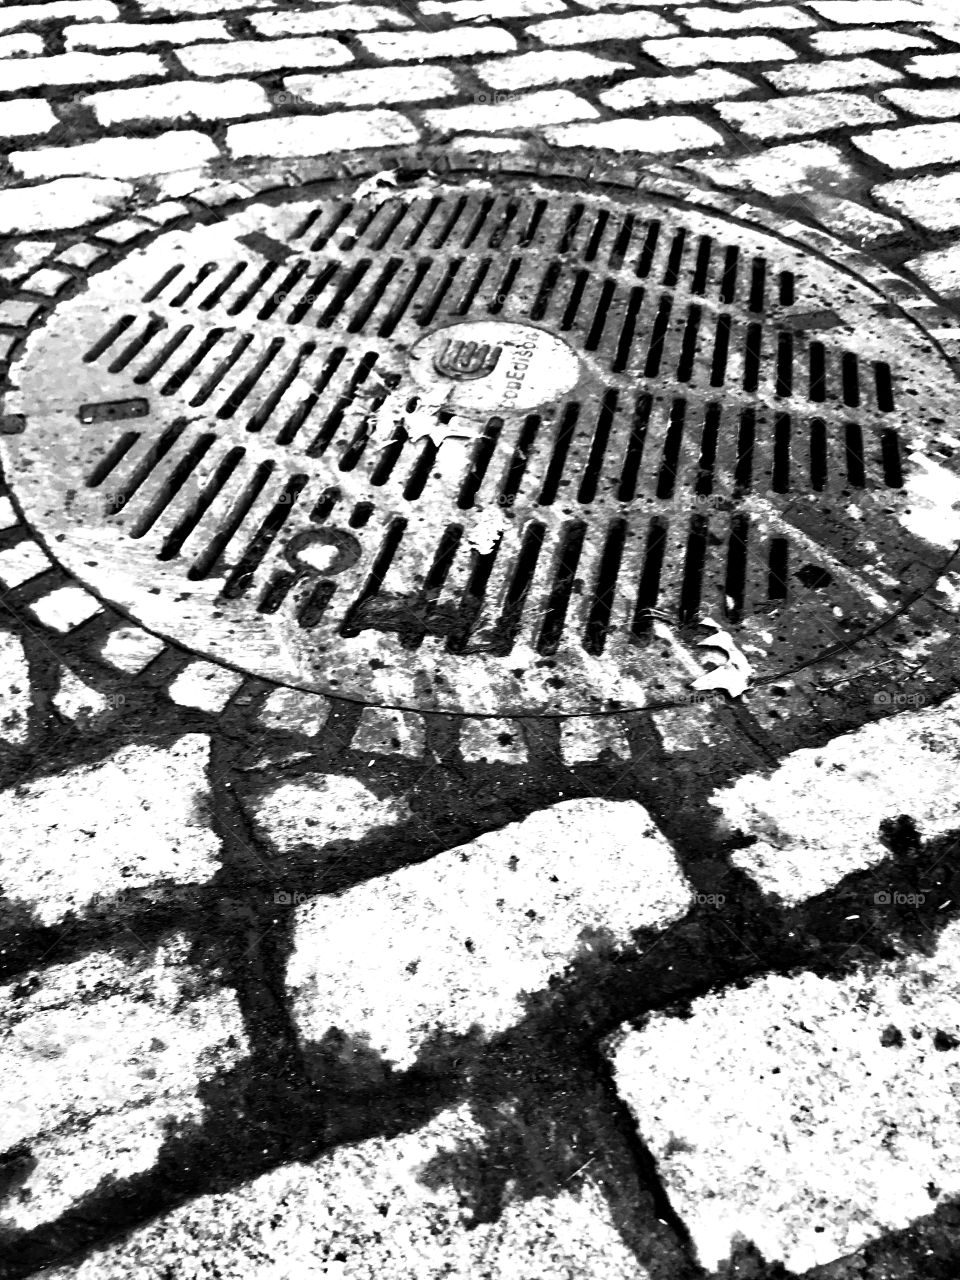 Cobblestone street and Sewage in Greenwich Village New York City 